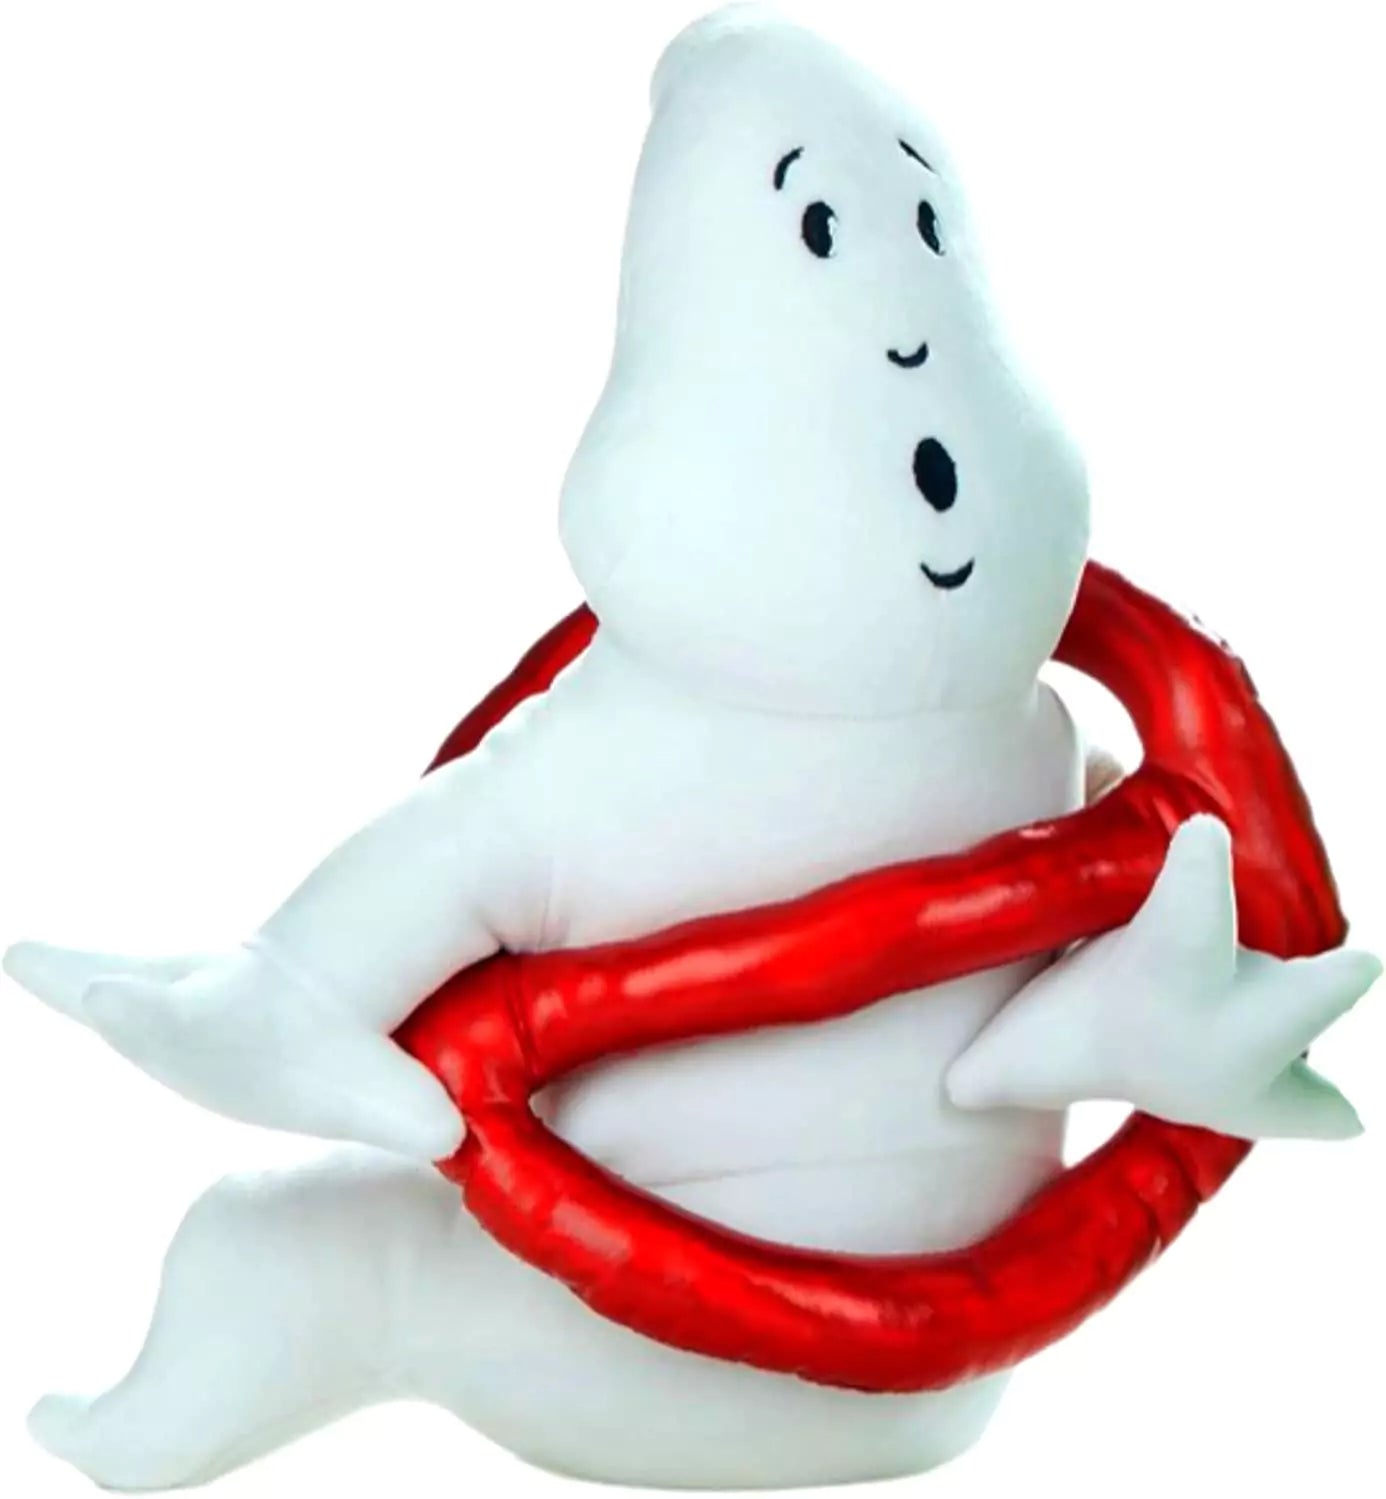 Ghostbusters No Ghost Logo Soft Plush Toy - Toptoys2u